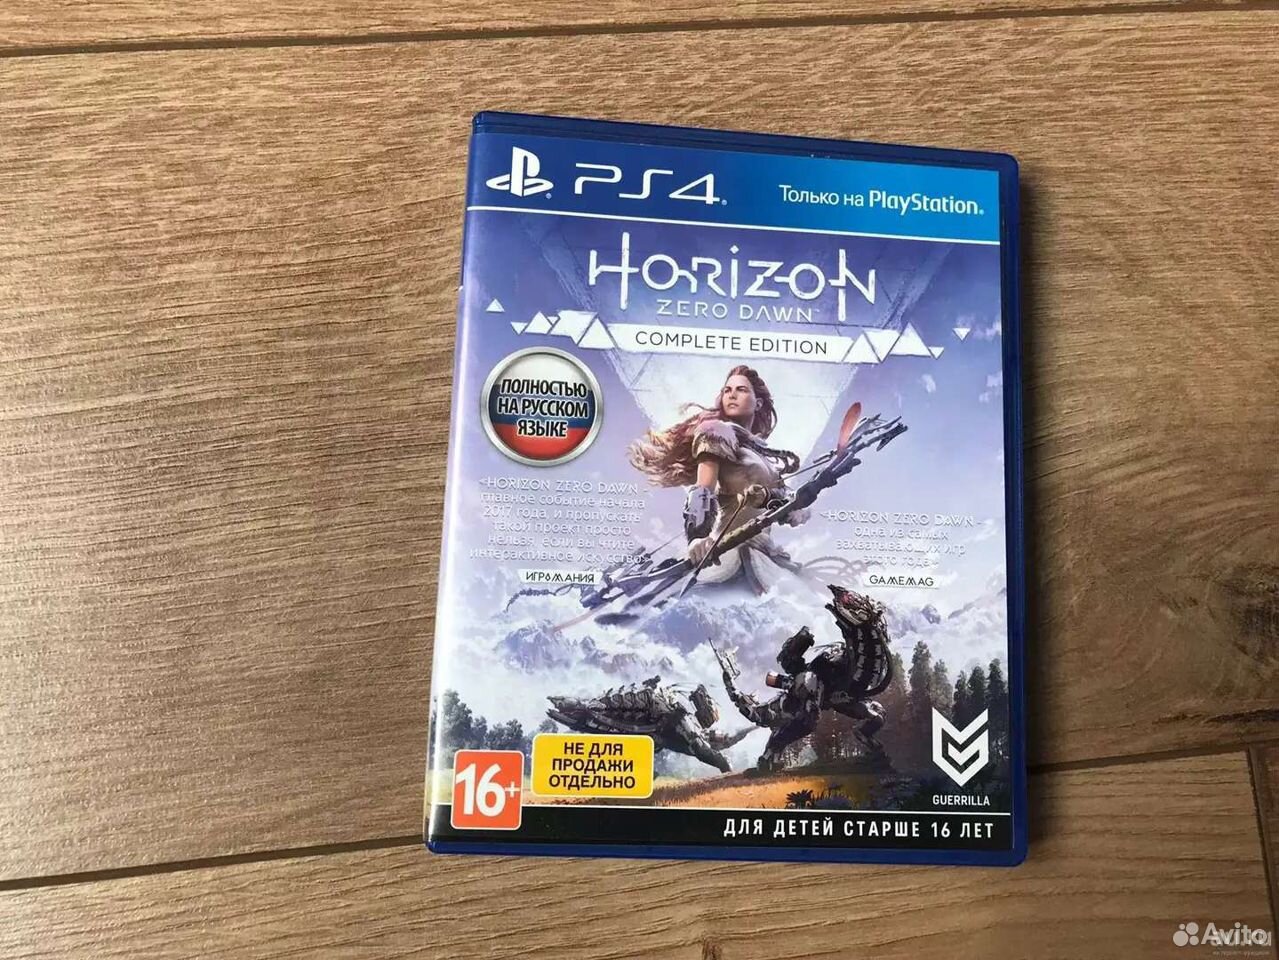 Complete edition game. Horizon Zero Dawn ps4 диск. Horizon Zero Dawn 2 диск на пс4. Horizon Zero Dawn диск пс4. Horizon Zero Dawn complete Edition ps4.